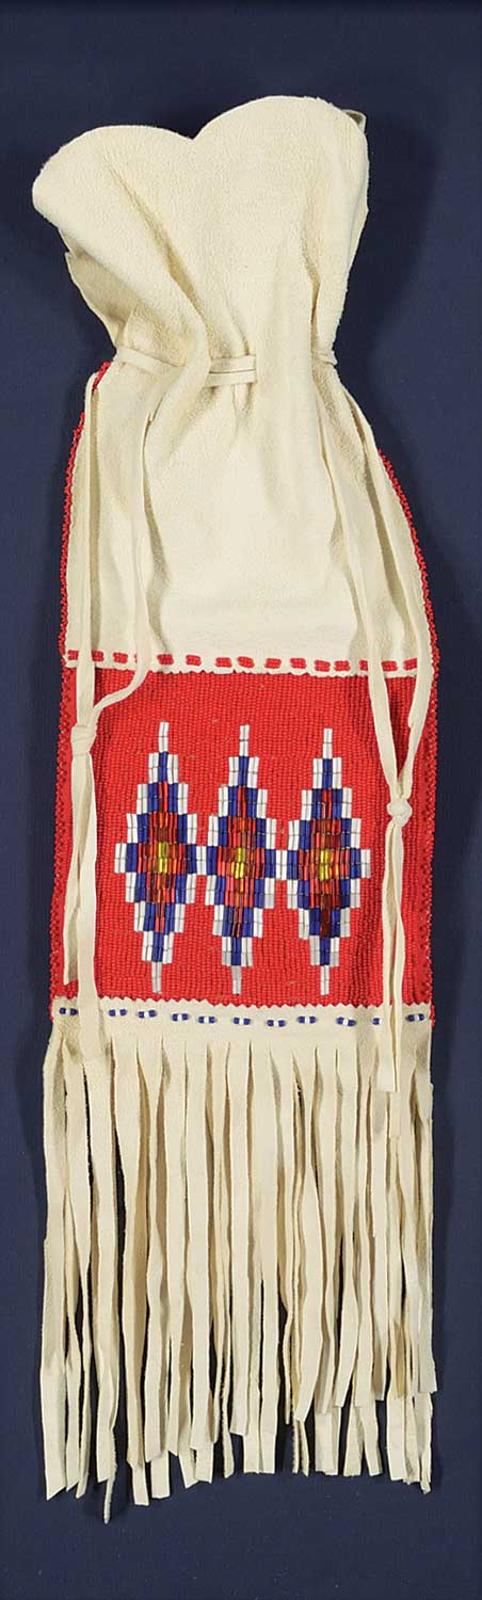 First Nations Basket School - Untitled - Beaded Medicine Bag